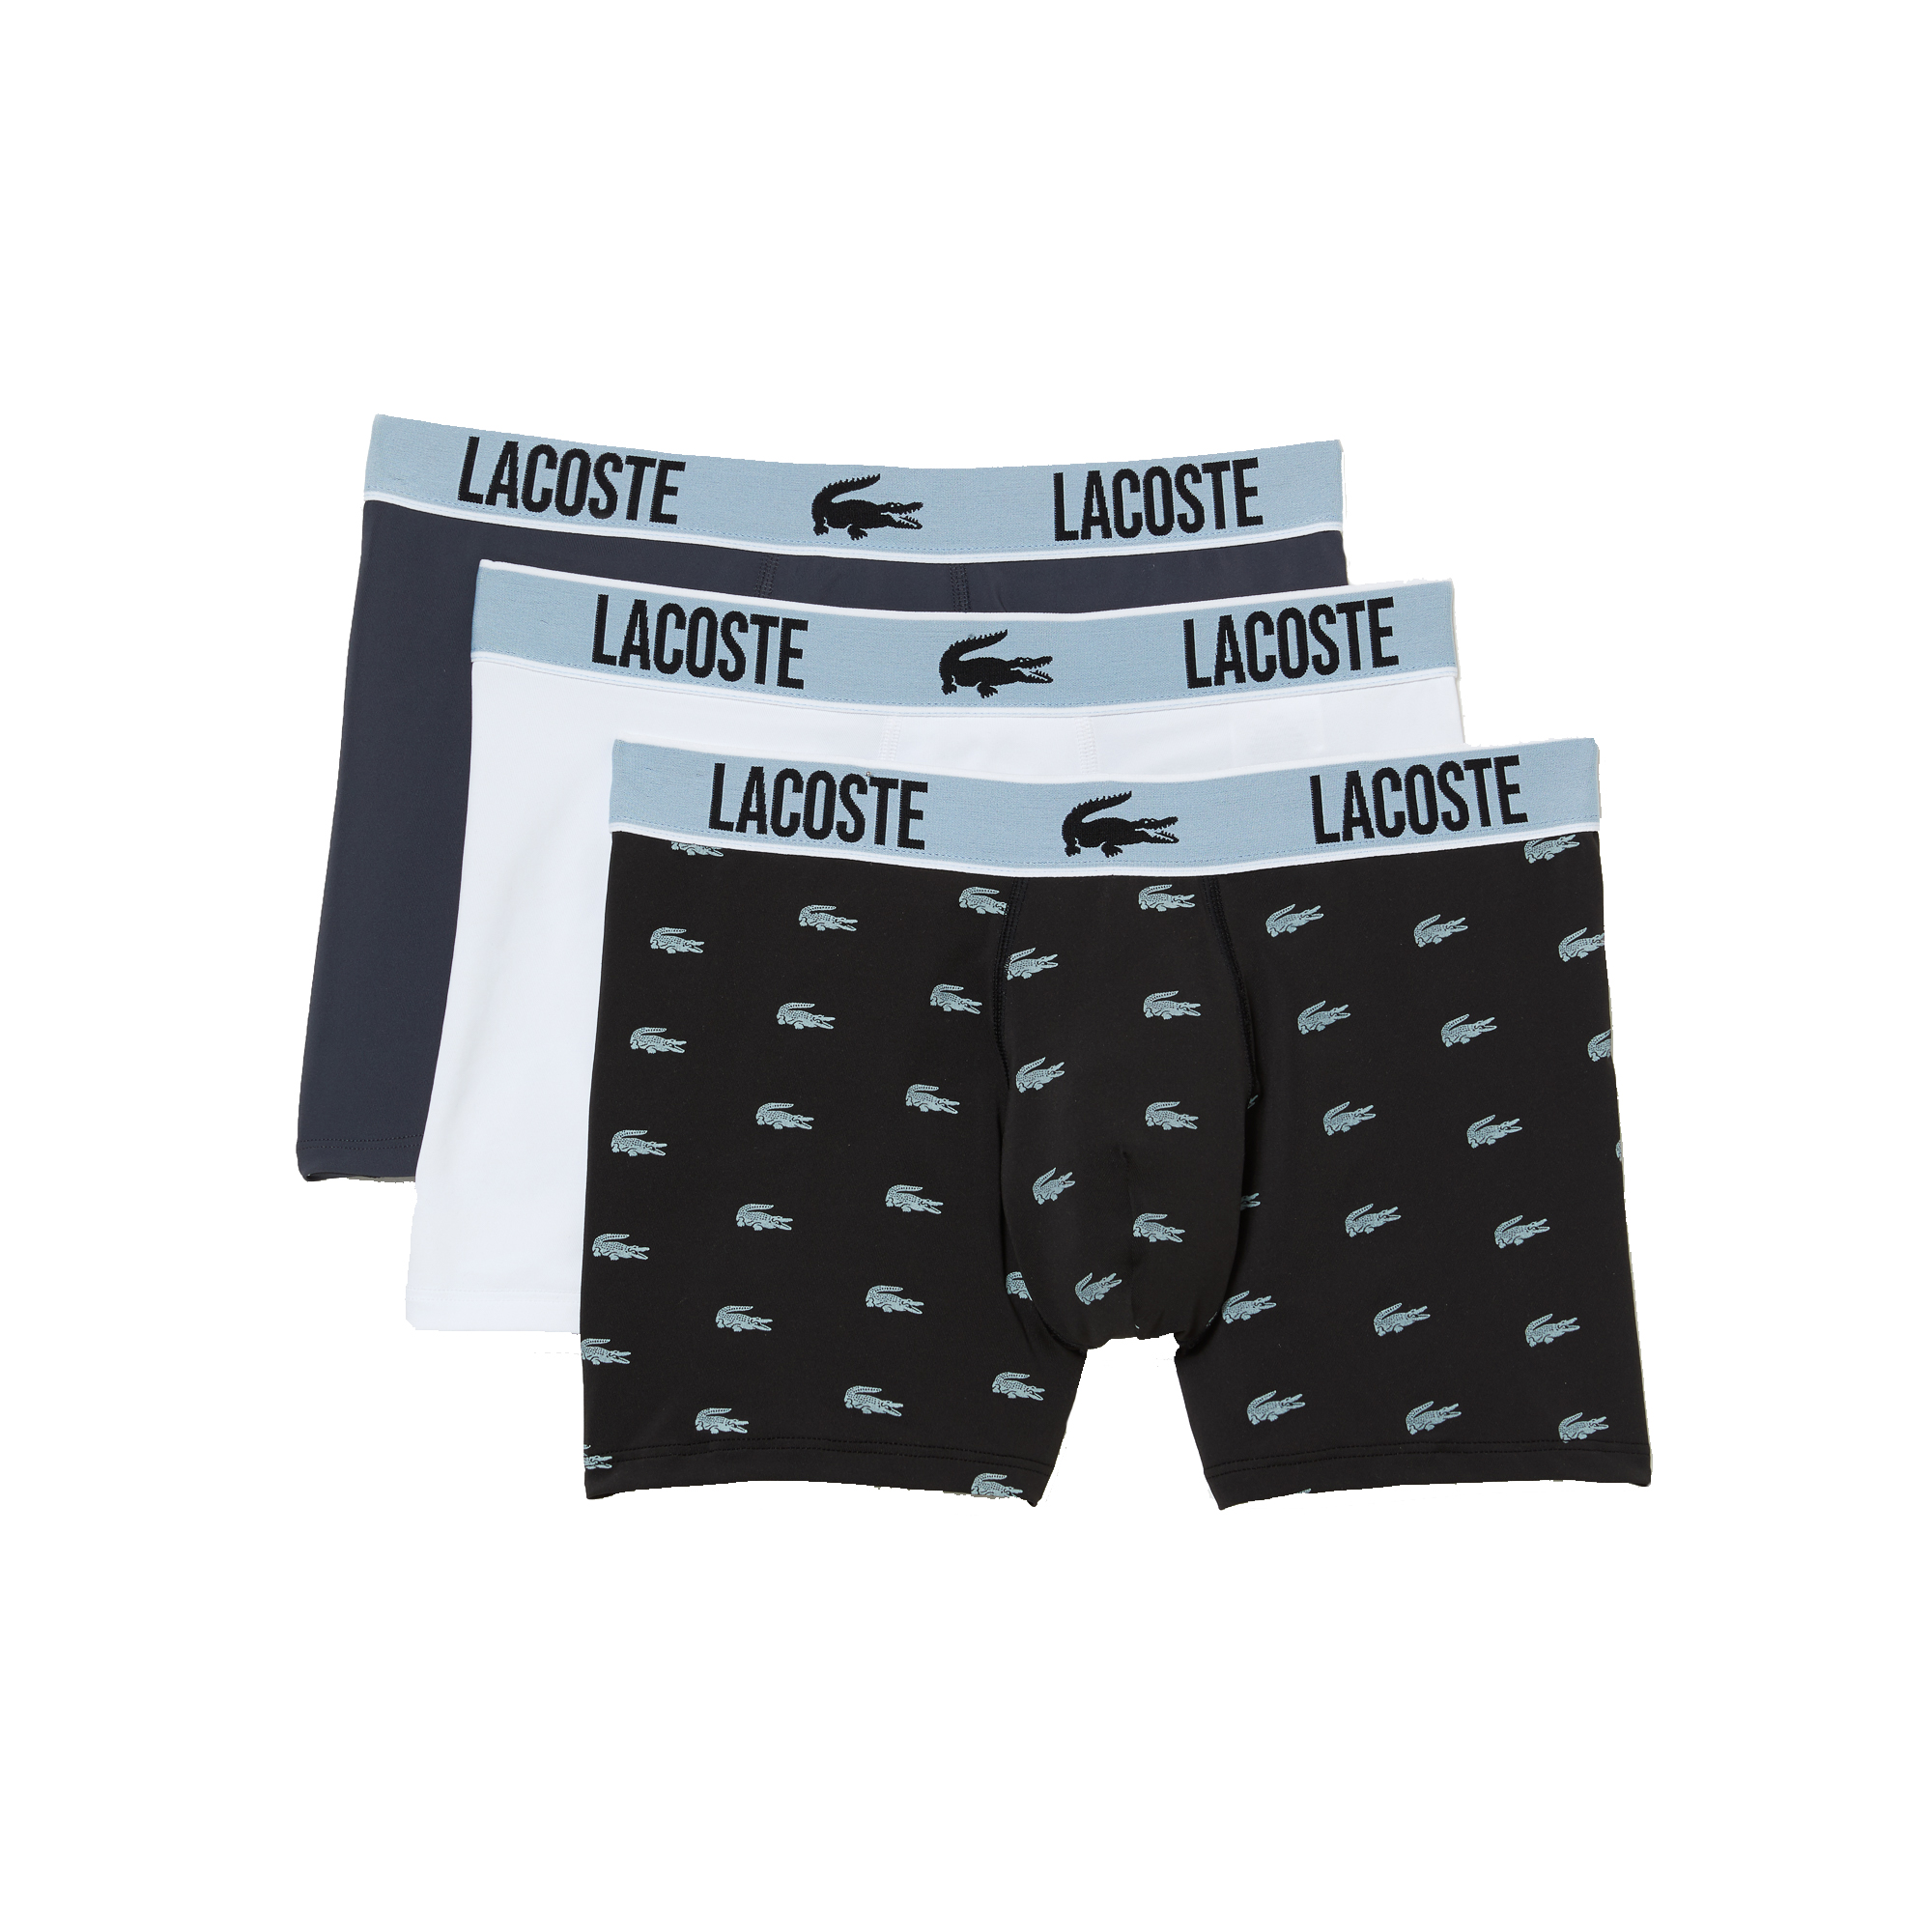 Lacoste Lacoste Boxershorts Heren Microfiber Krokdillen Print 3 Pack